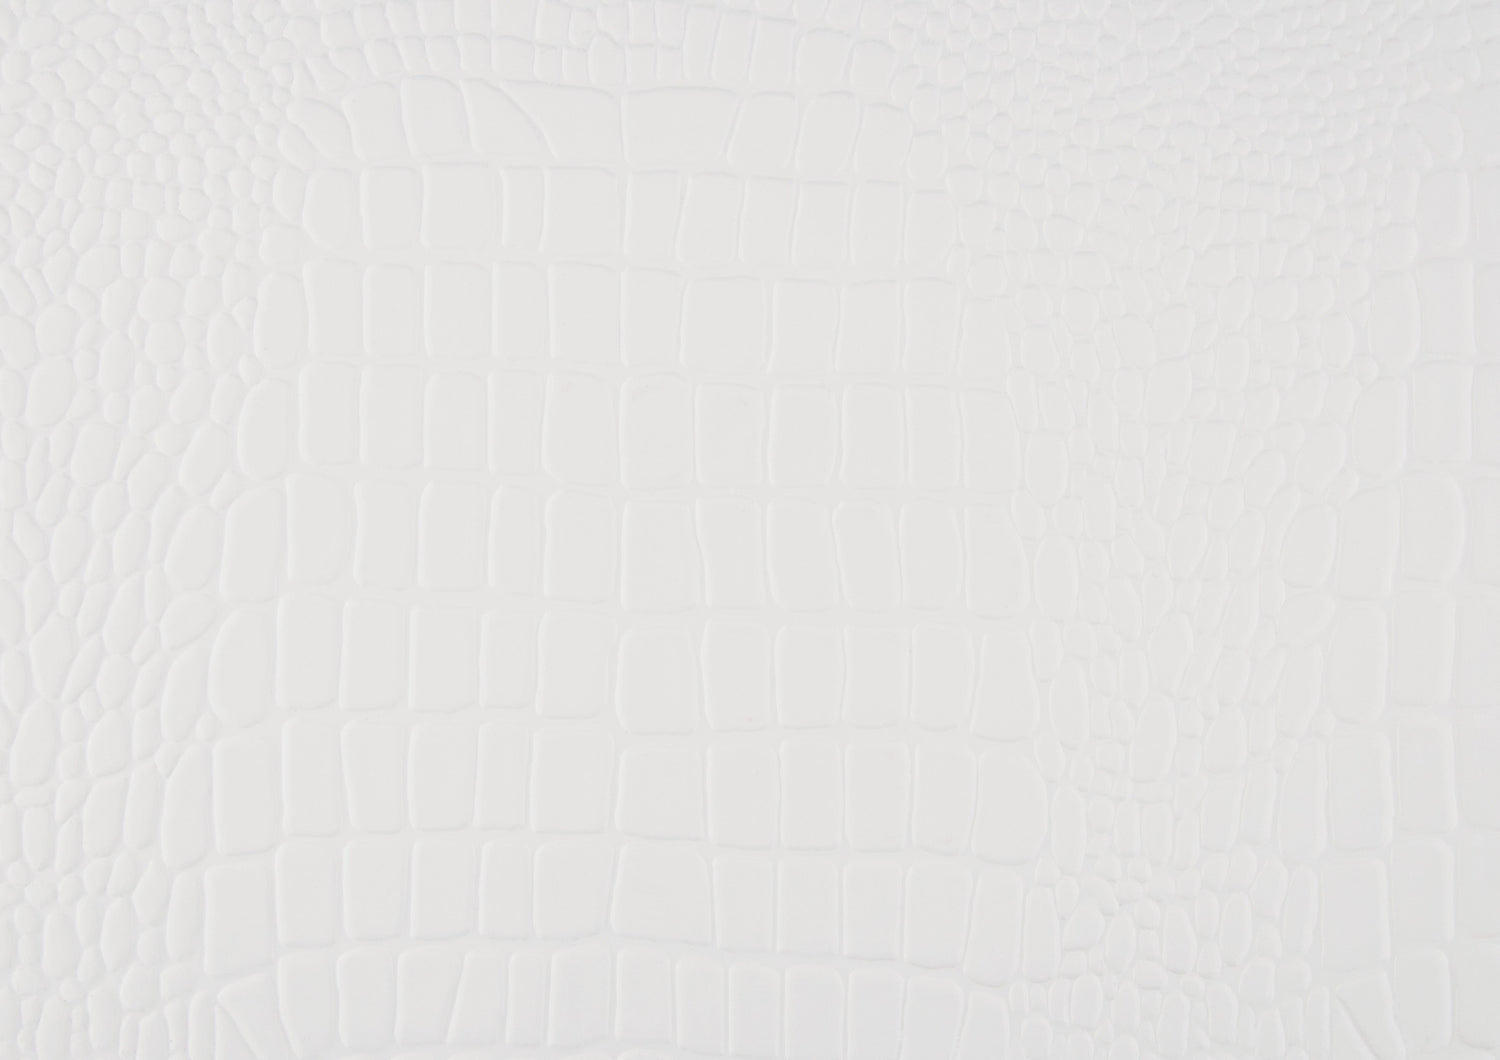 Lana White Full LED Upholstered Panel Bed - SET | 1556WF-1 | 1556W-3 - Bien Home Furniture &amp; Electronics